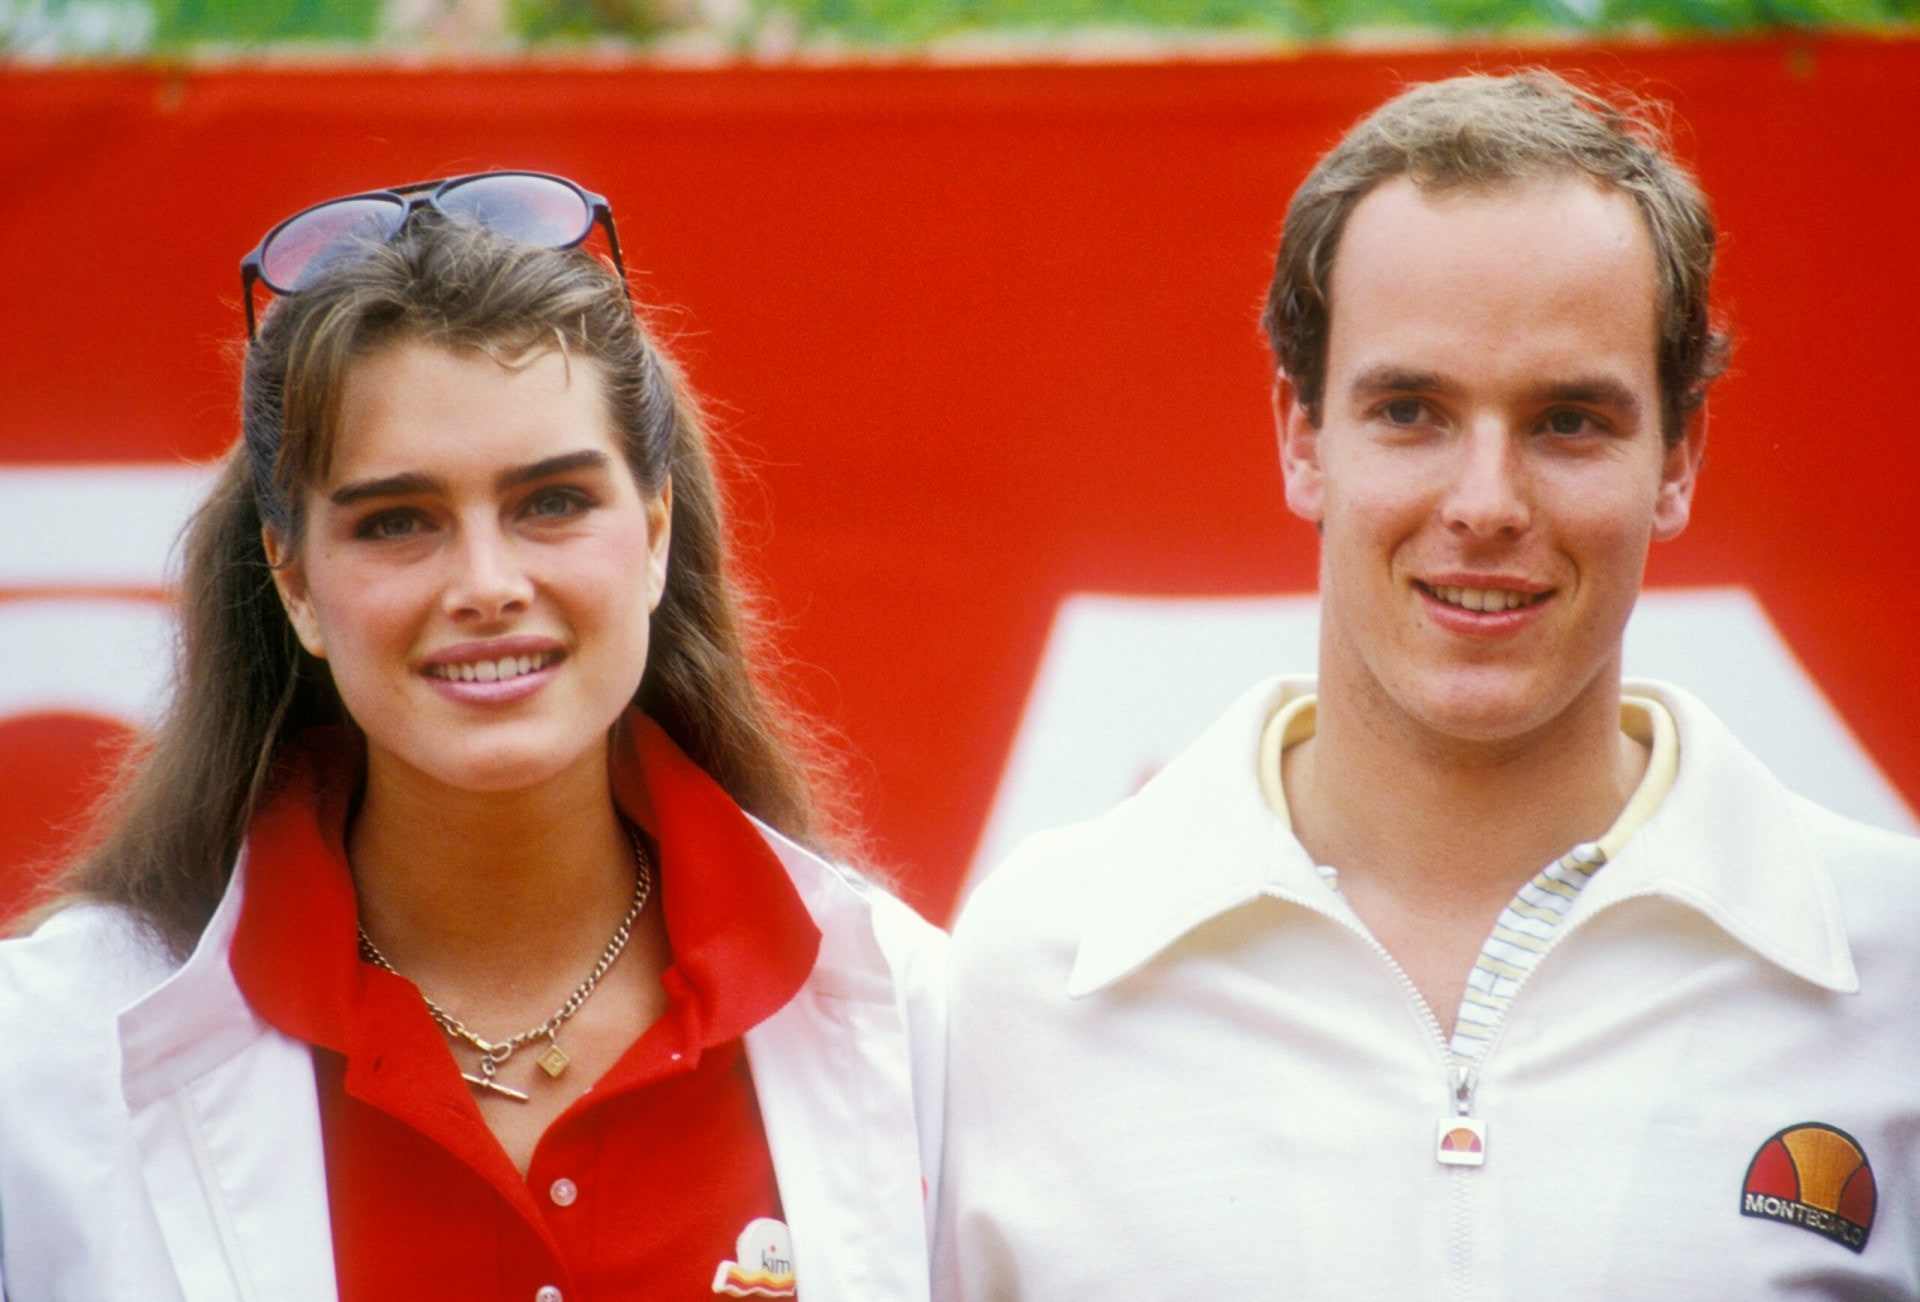 Brooke Shields and Prince Albert of Monaco